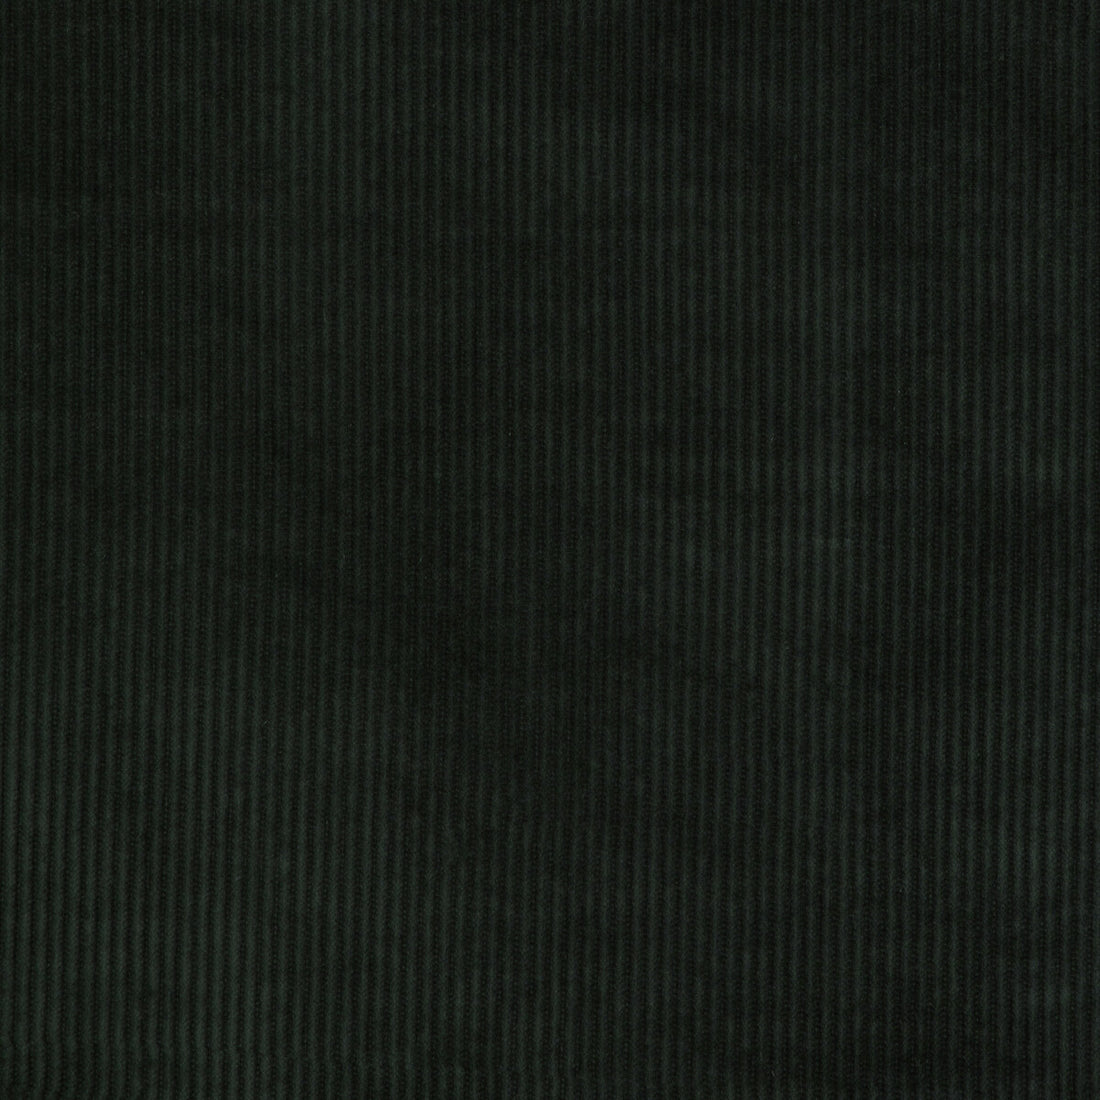 Kravet Smart fabric in 37006-350 color - pattern 37006.350.0 - by Kravet Smart